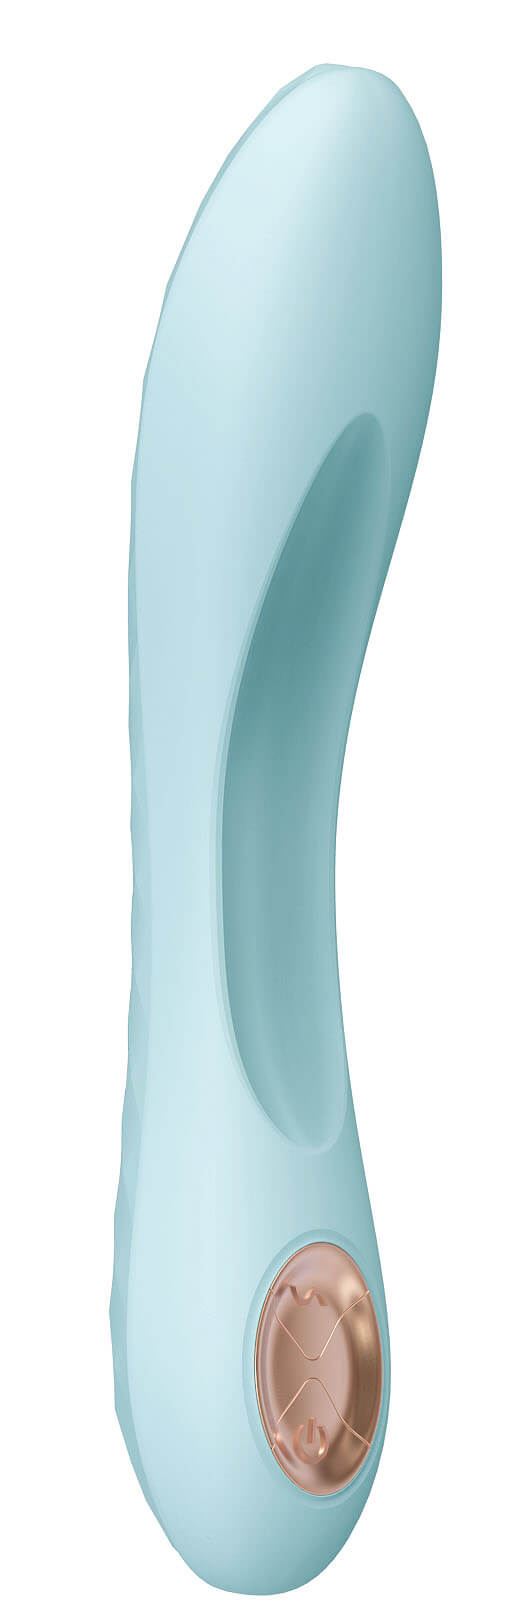 Moderní vibrátor AQUATIC Delphine silikonový modrý 17x3,6 cm